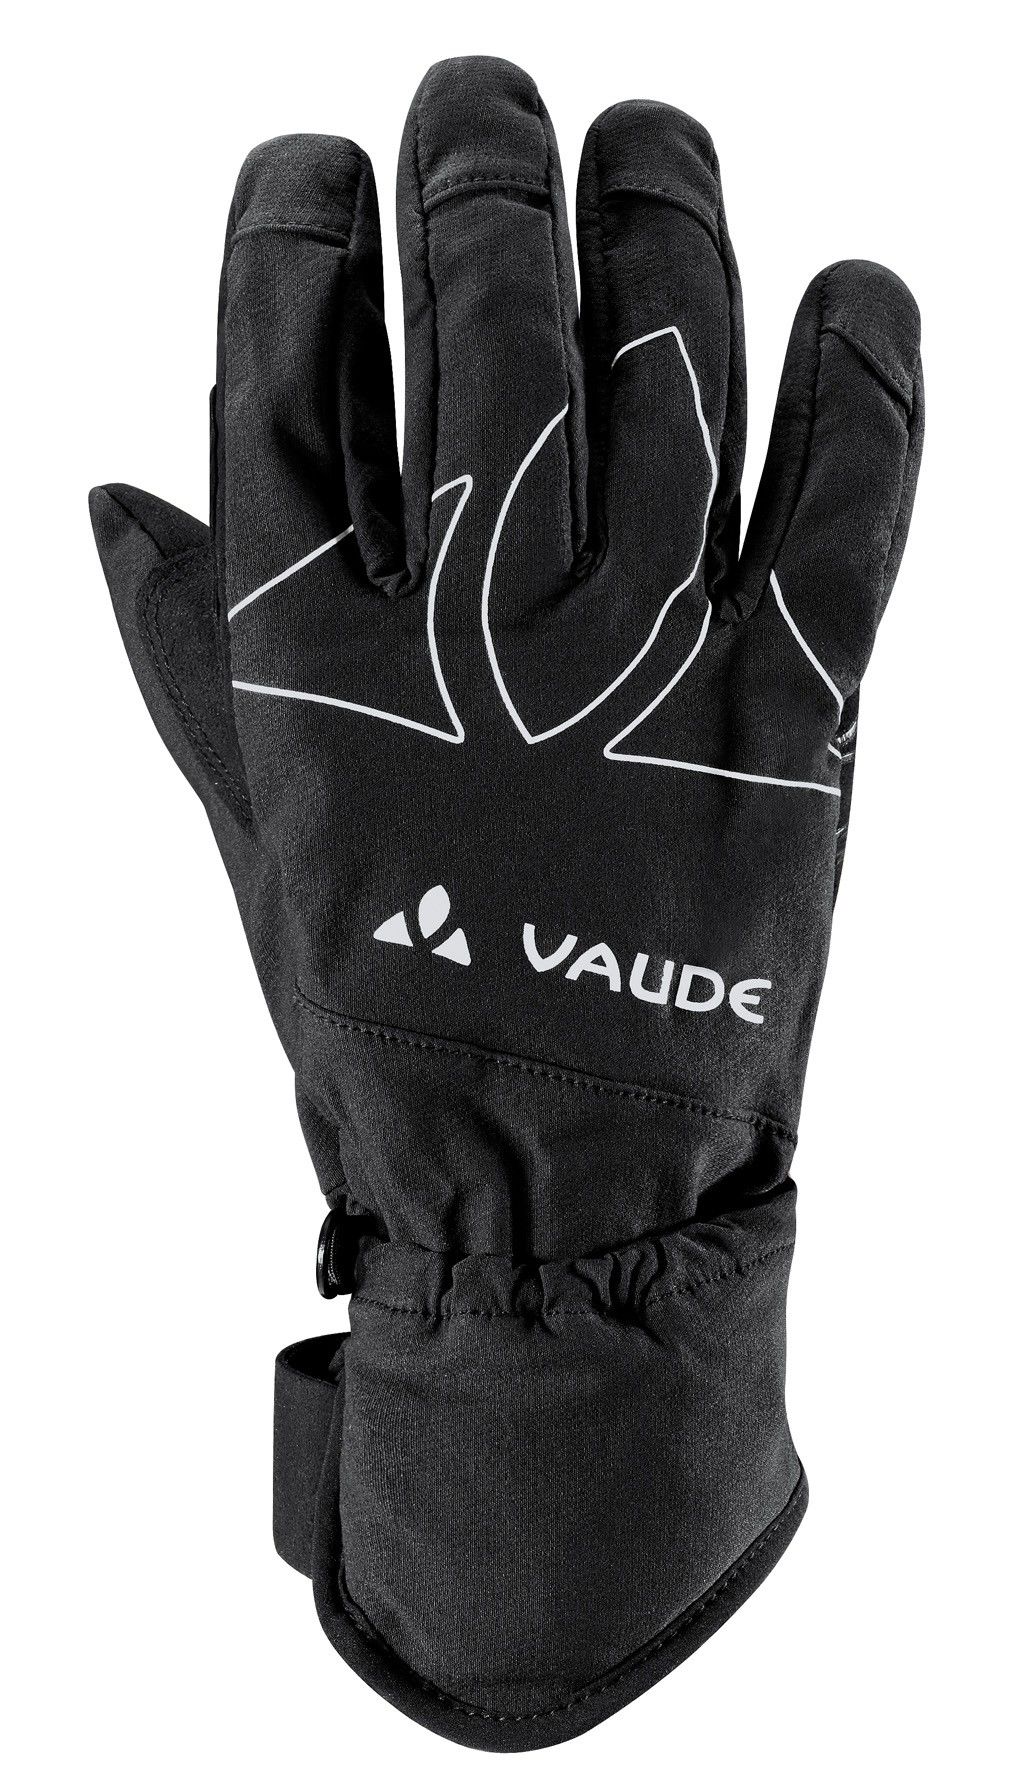 Vaude La Varella Gloves Schwarz- Fingerhandschuhe- Grsse 6 - Farbe Black